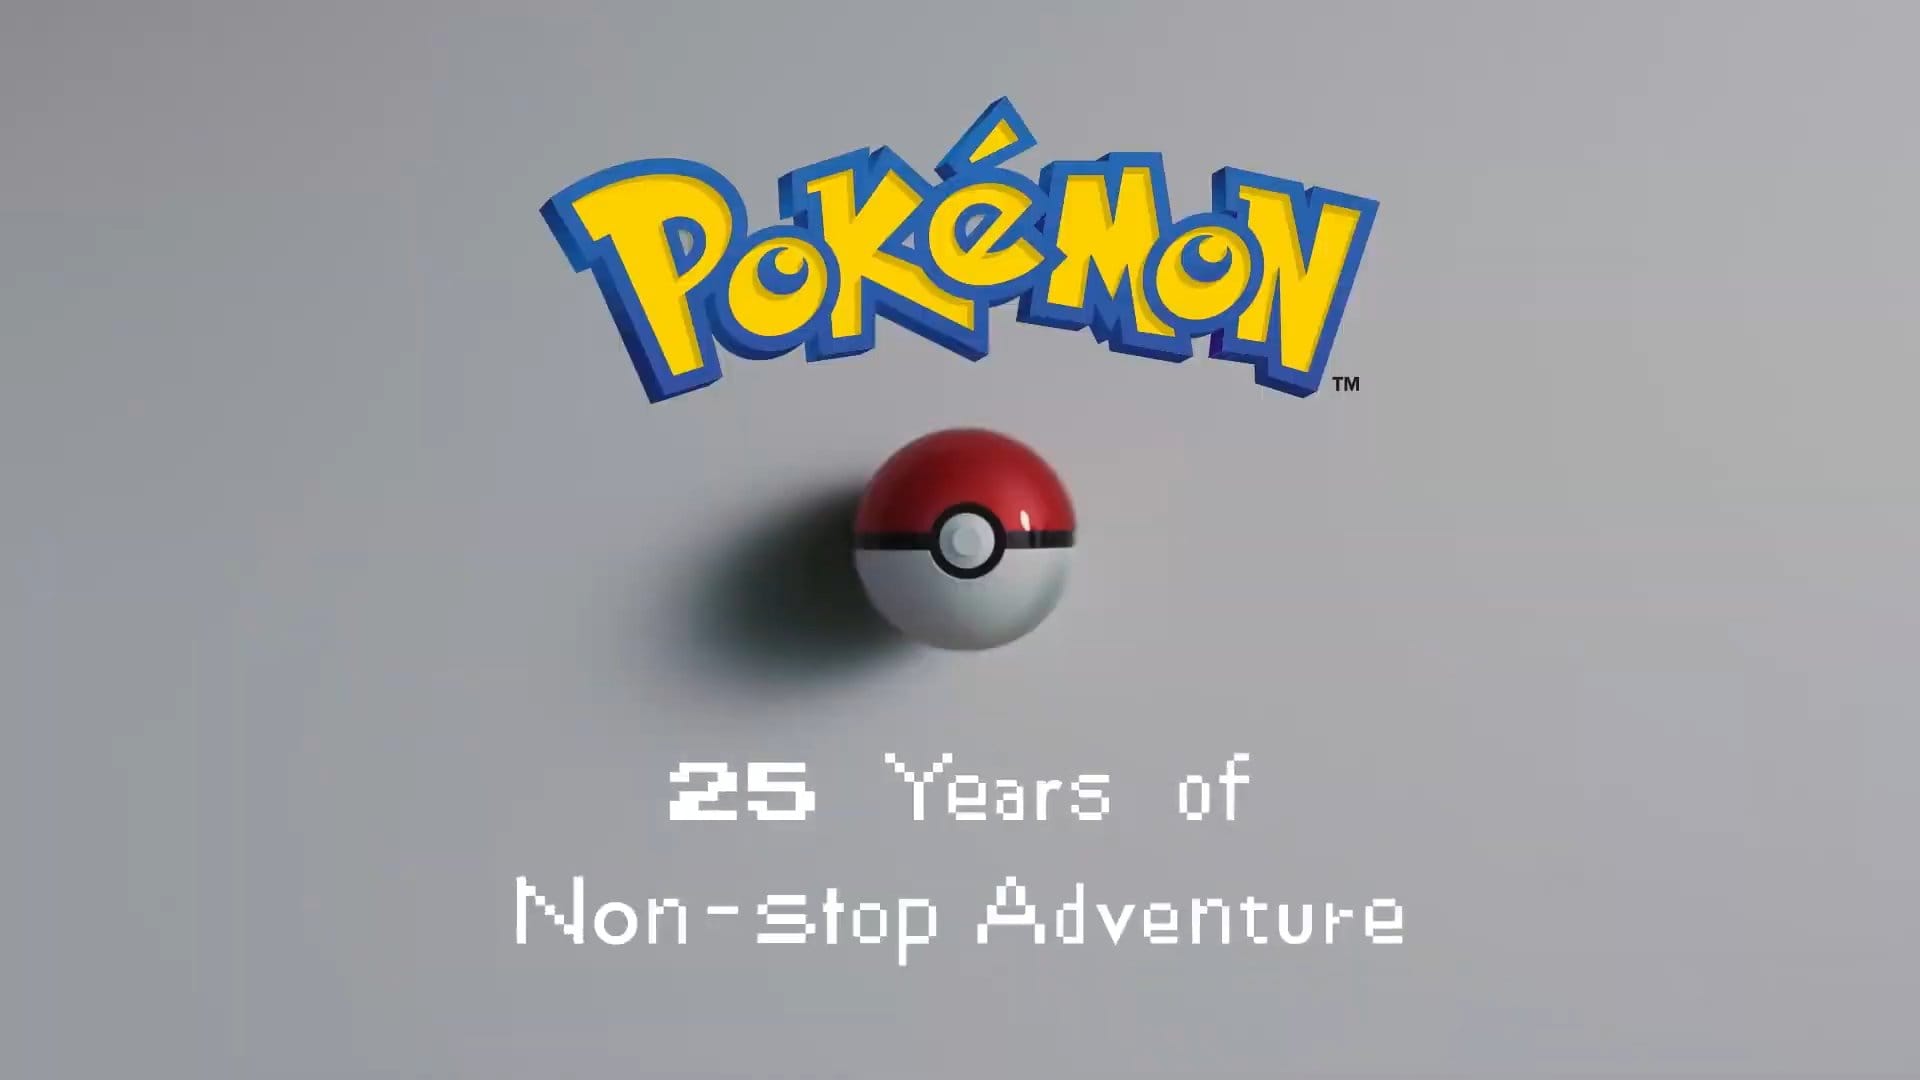 Pokemon Presents 25th anniversary